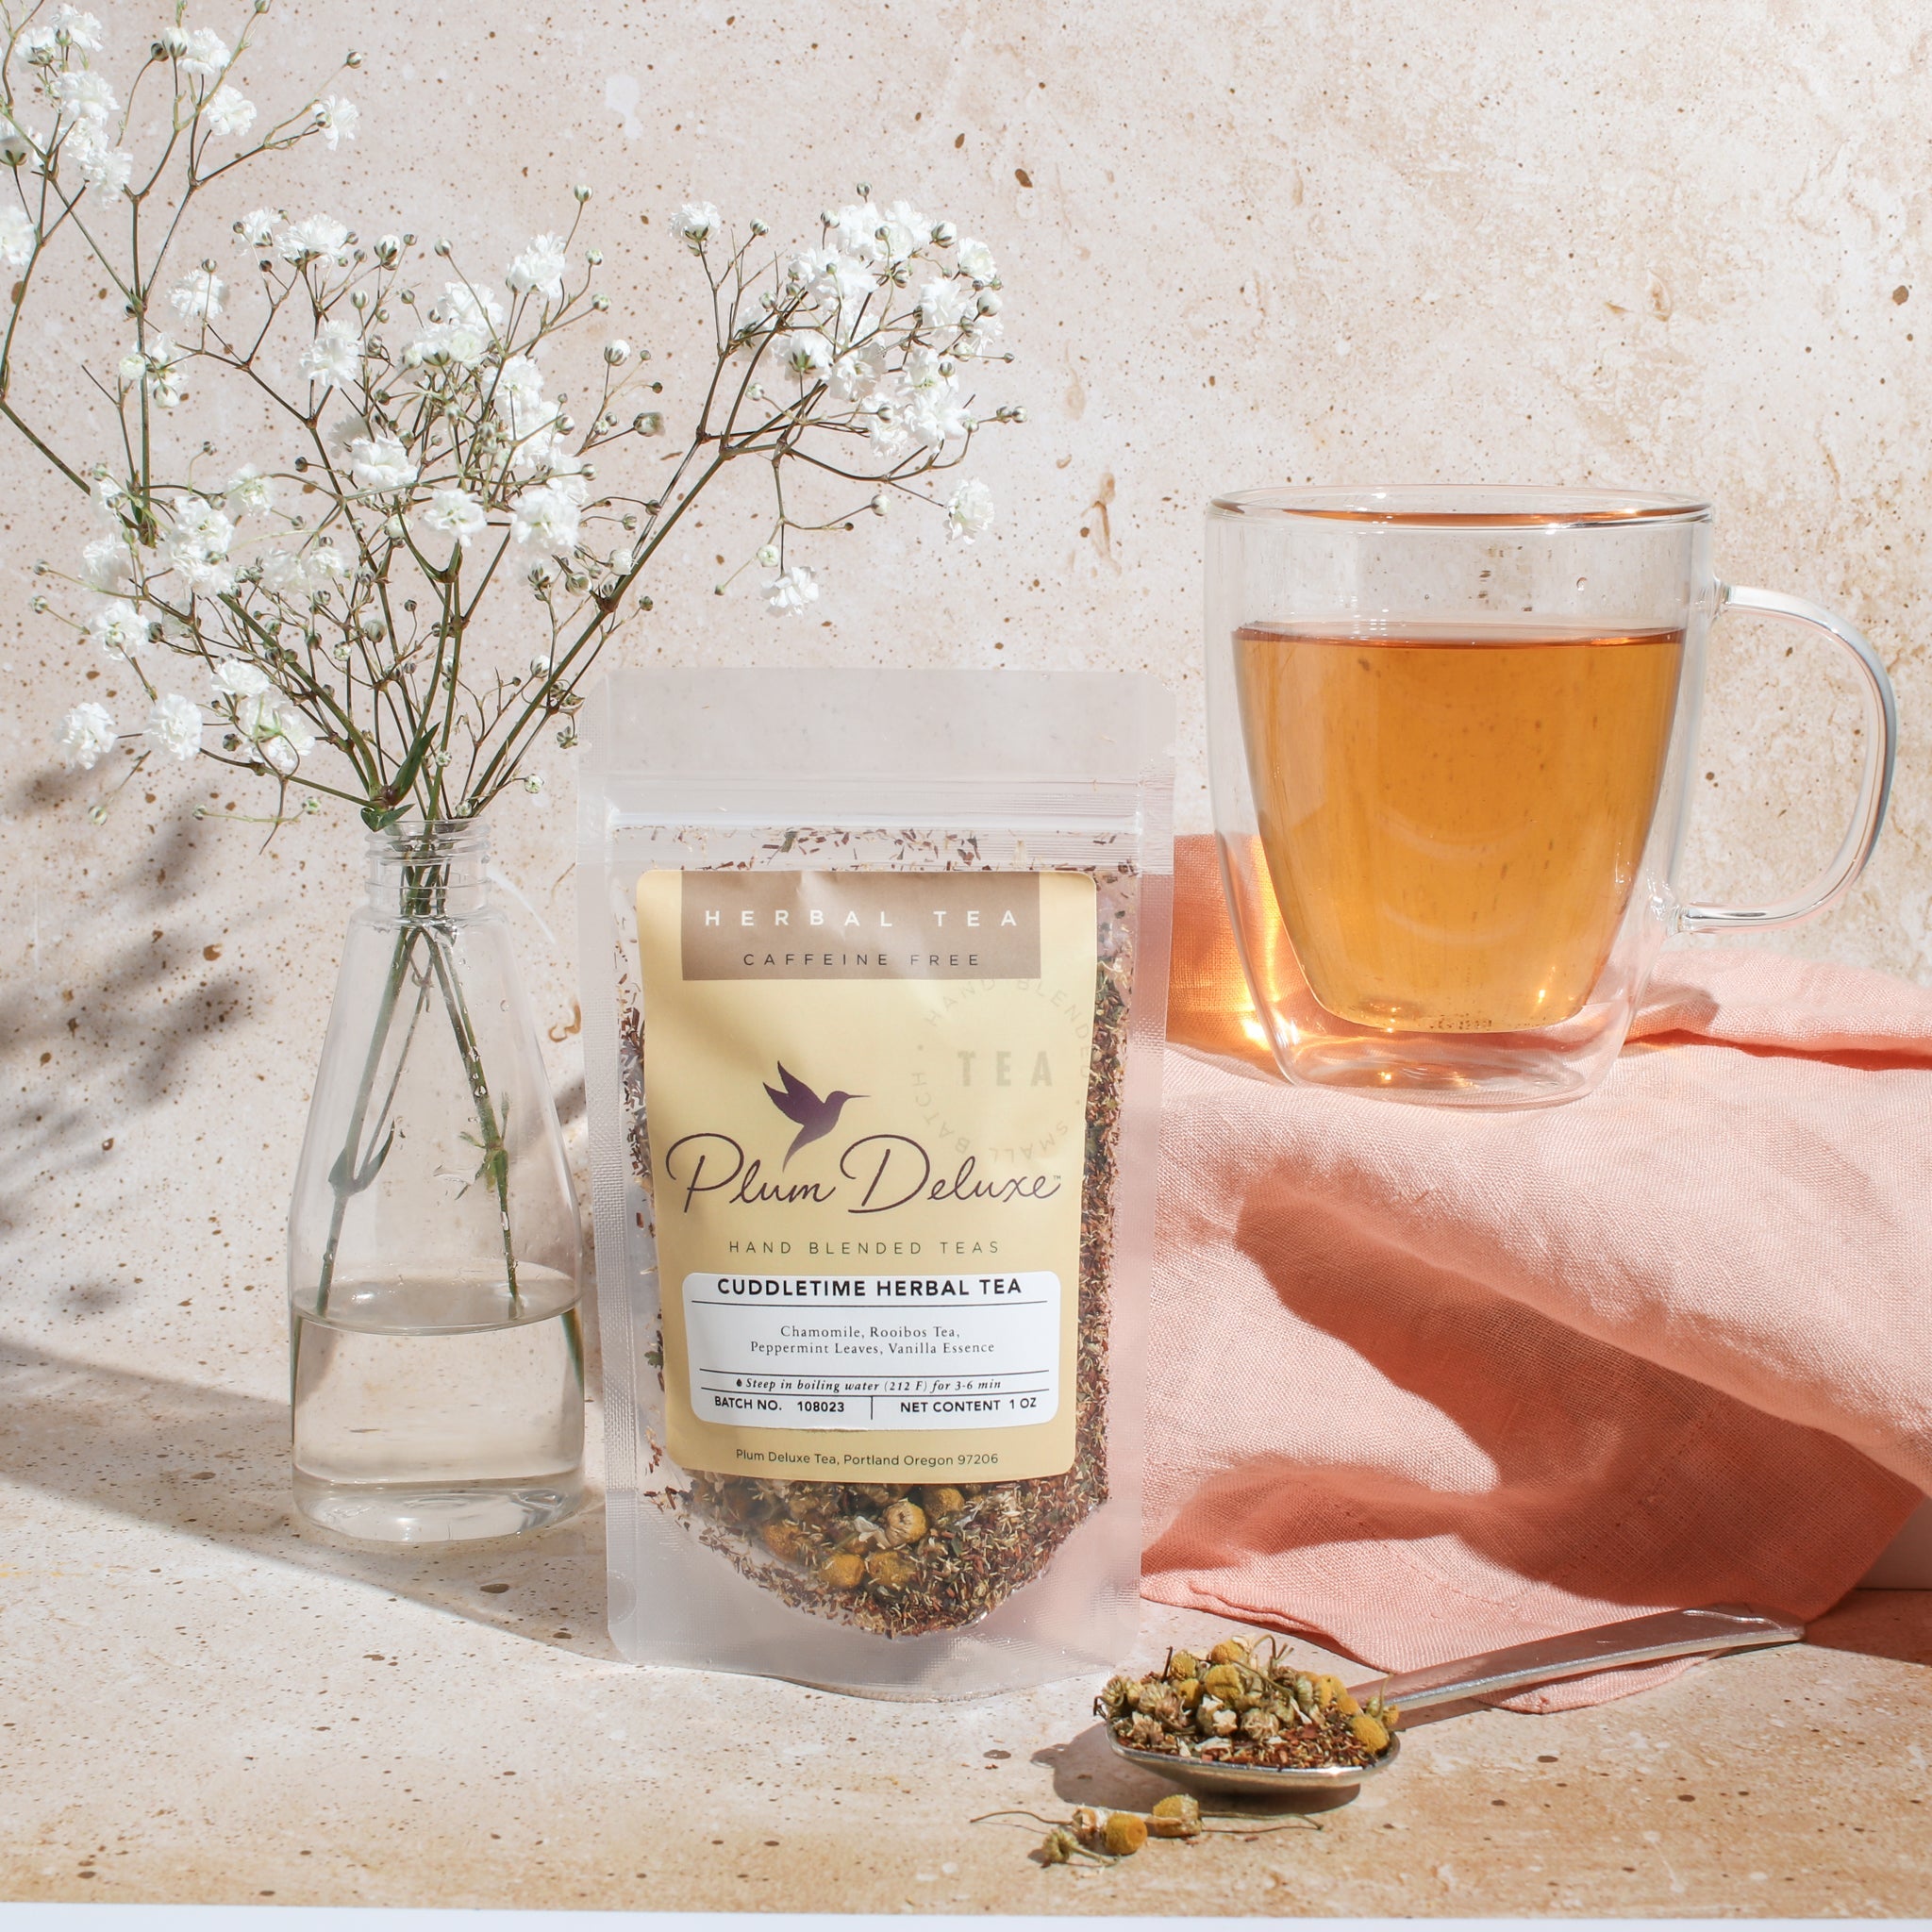 Cuddletime Herbal Tea (Chamomile - Mint) by Plum Deluxe Tea